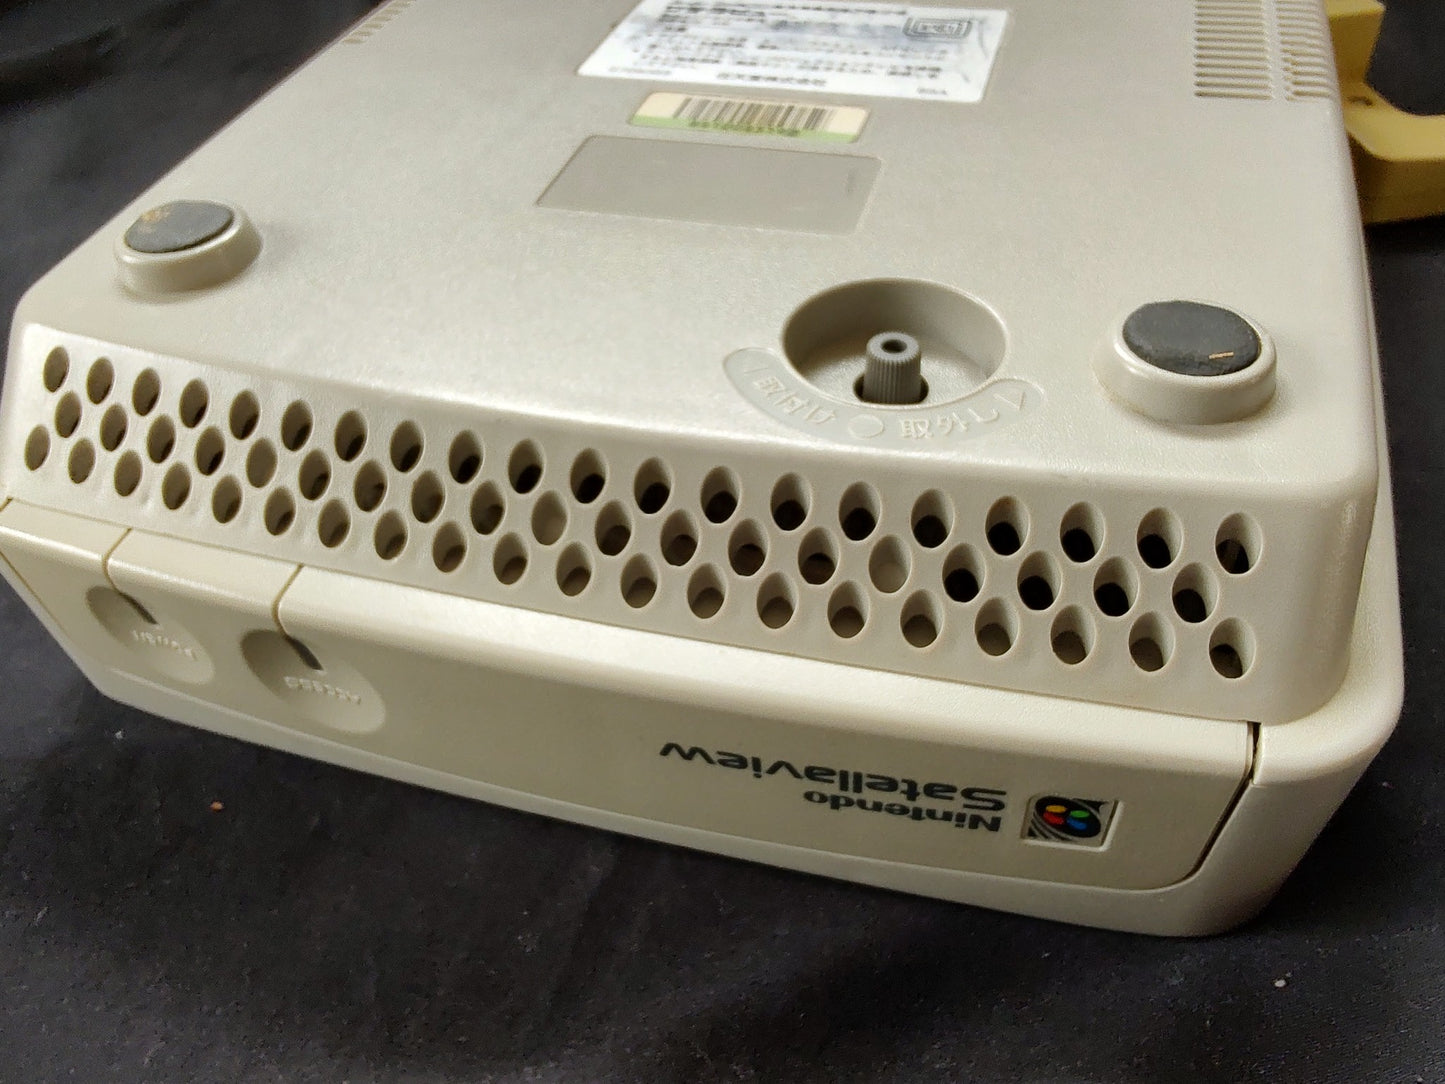 Nintendo Satellaview SHVC-029 and Accessories set Super Famicom console-f0608-